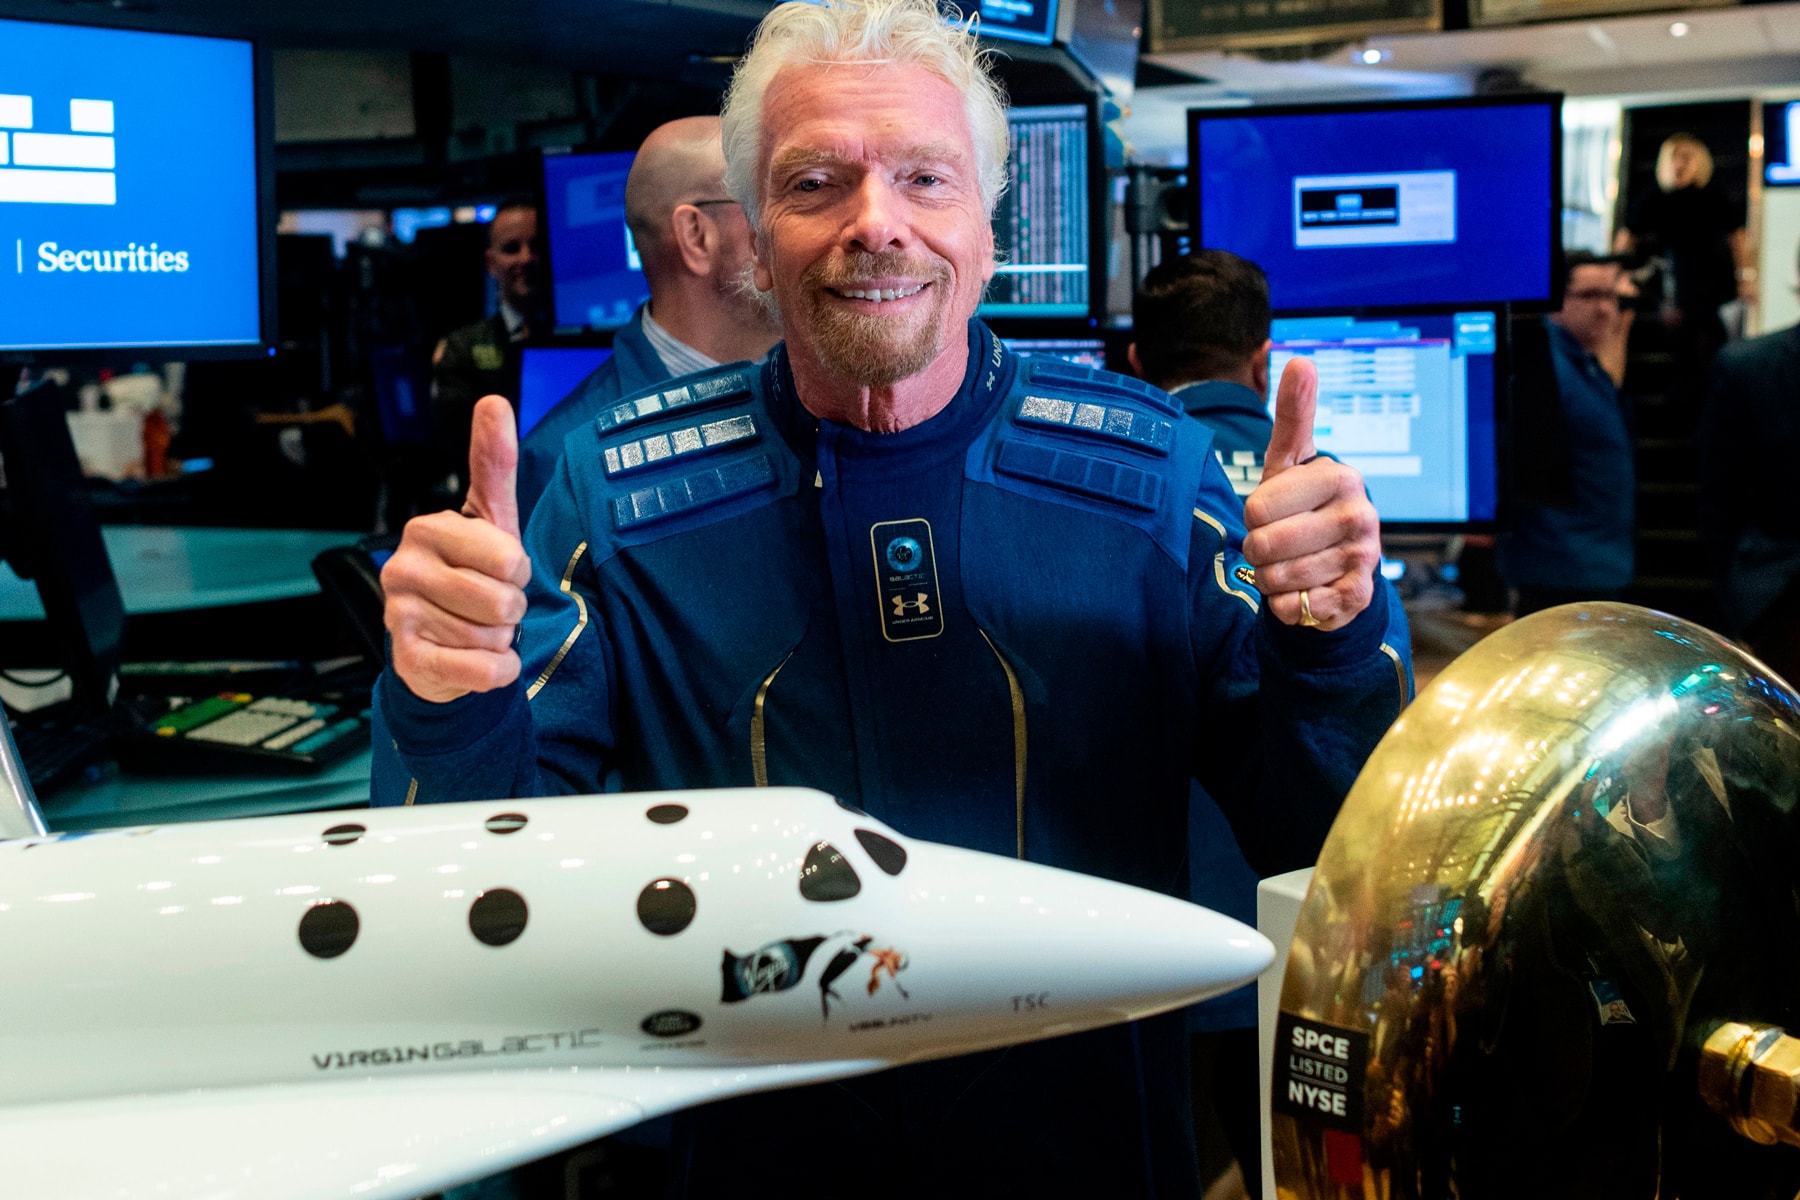 Space Race: Richard Branson Announces July 11 Virgin Galactic Spaceflight 001 Unity 22  Jeff Bezos Blue Origin travel tourism elon musk spacex 